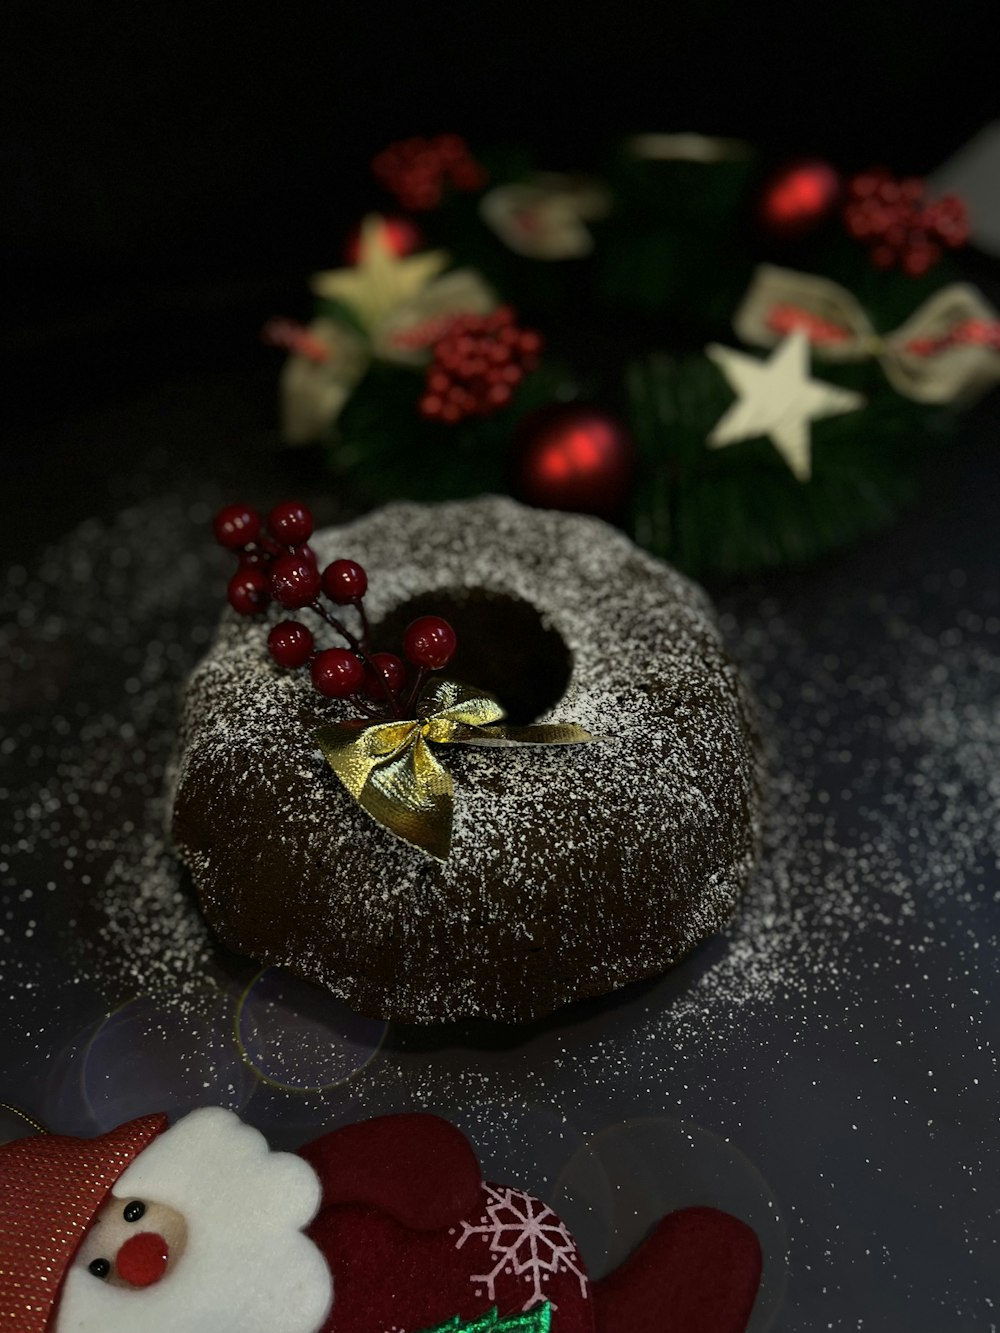 Un bundt cake de chocolate con decoración navideña